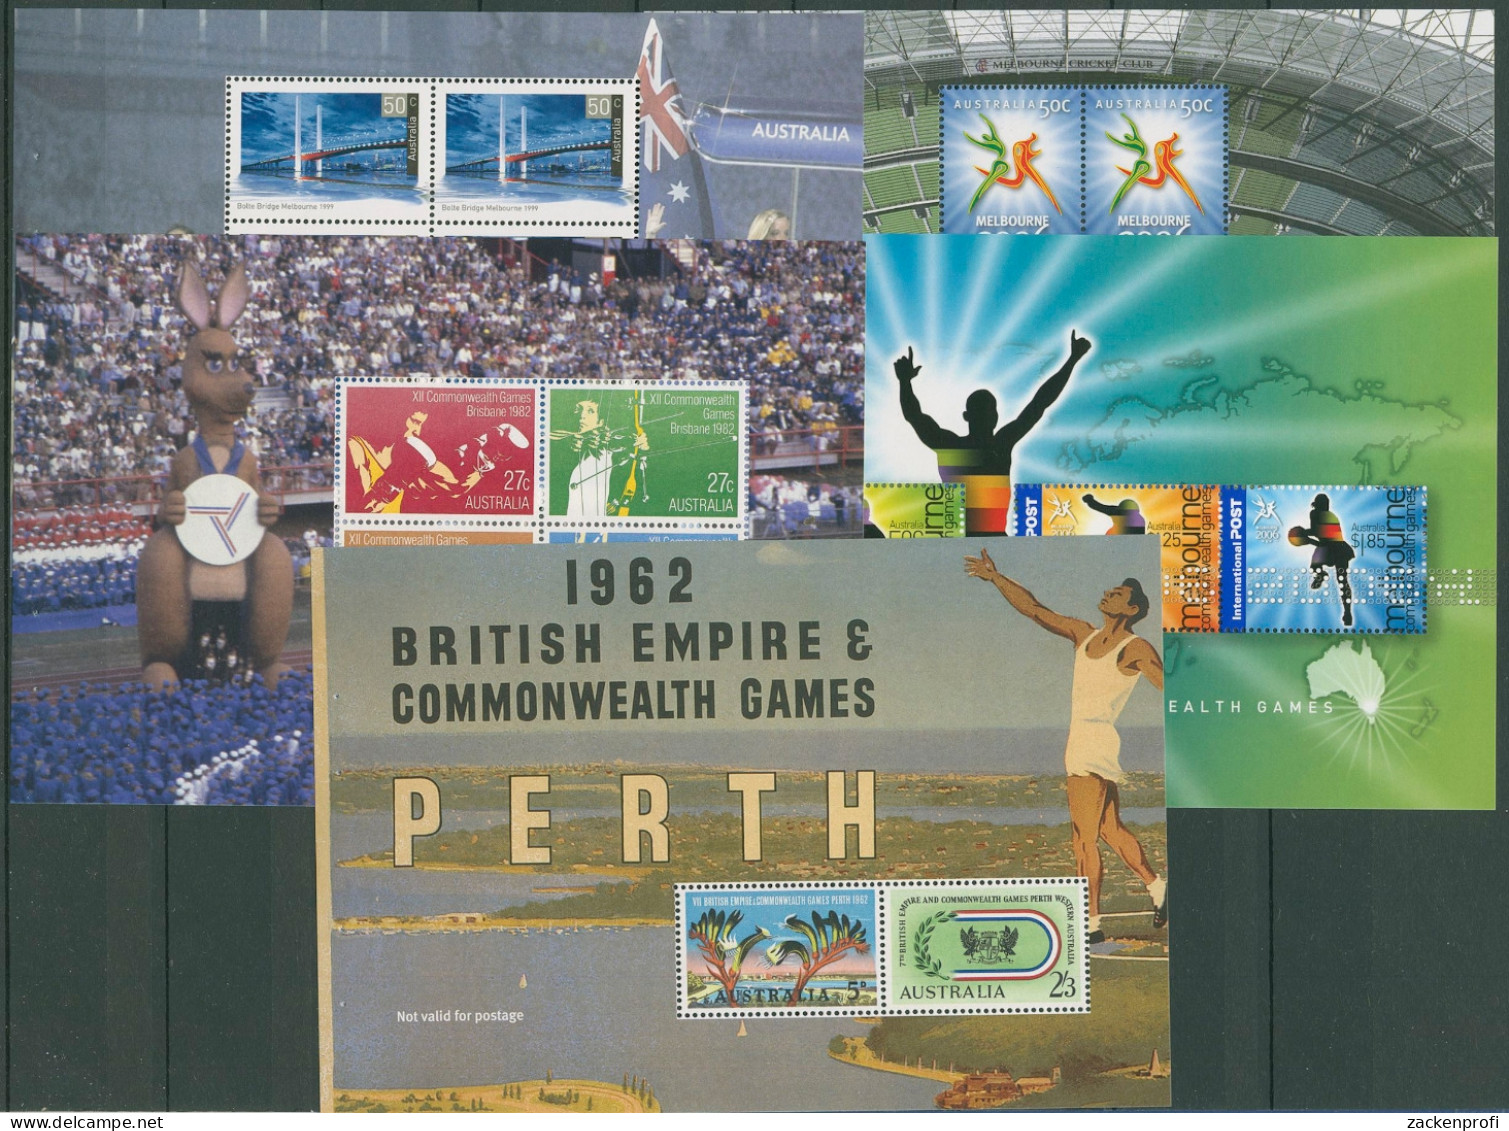 Australien 2006 Commonwealth Games MH 226 Postfrisch (C29644) - Carnets